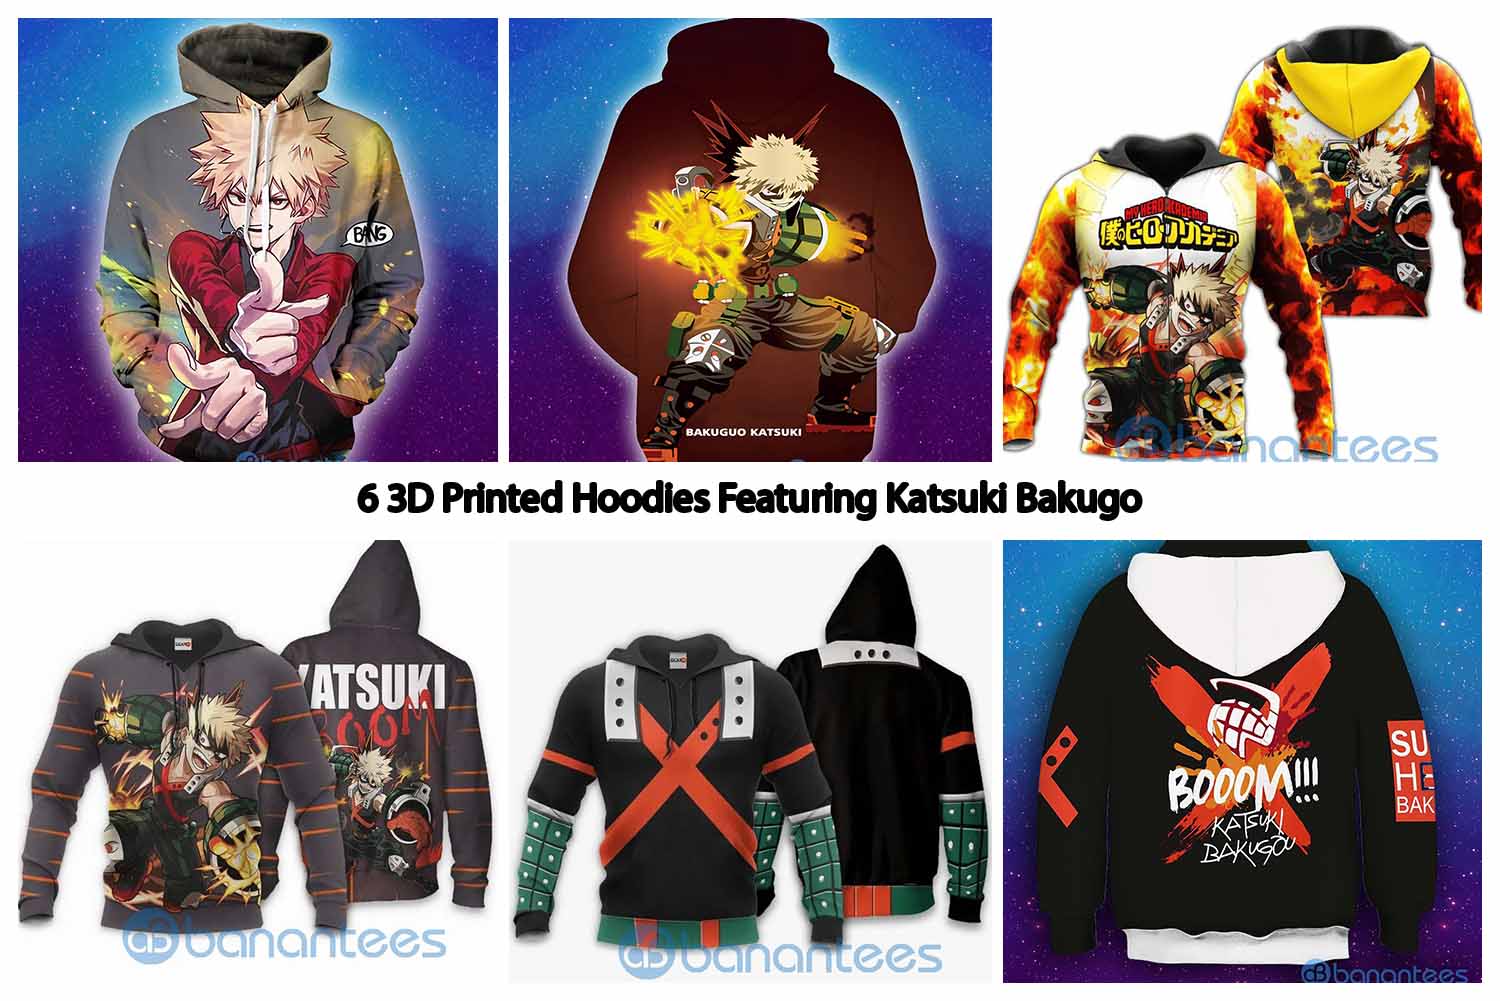 6 3D Printed Hoodies Featuring Katsuki Bakugo